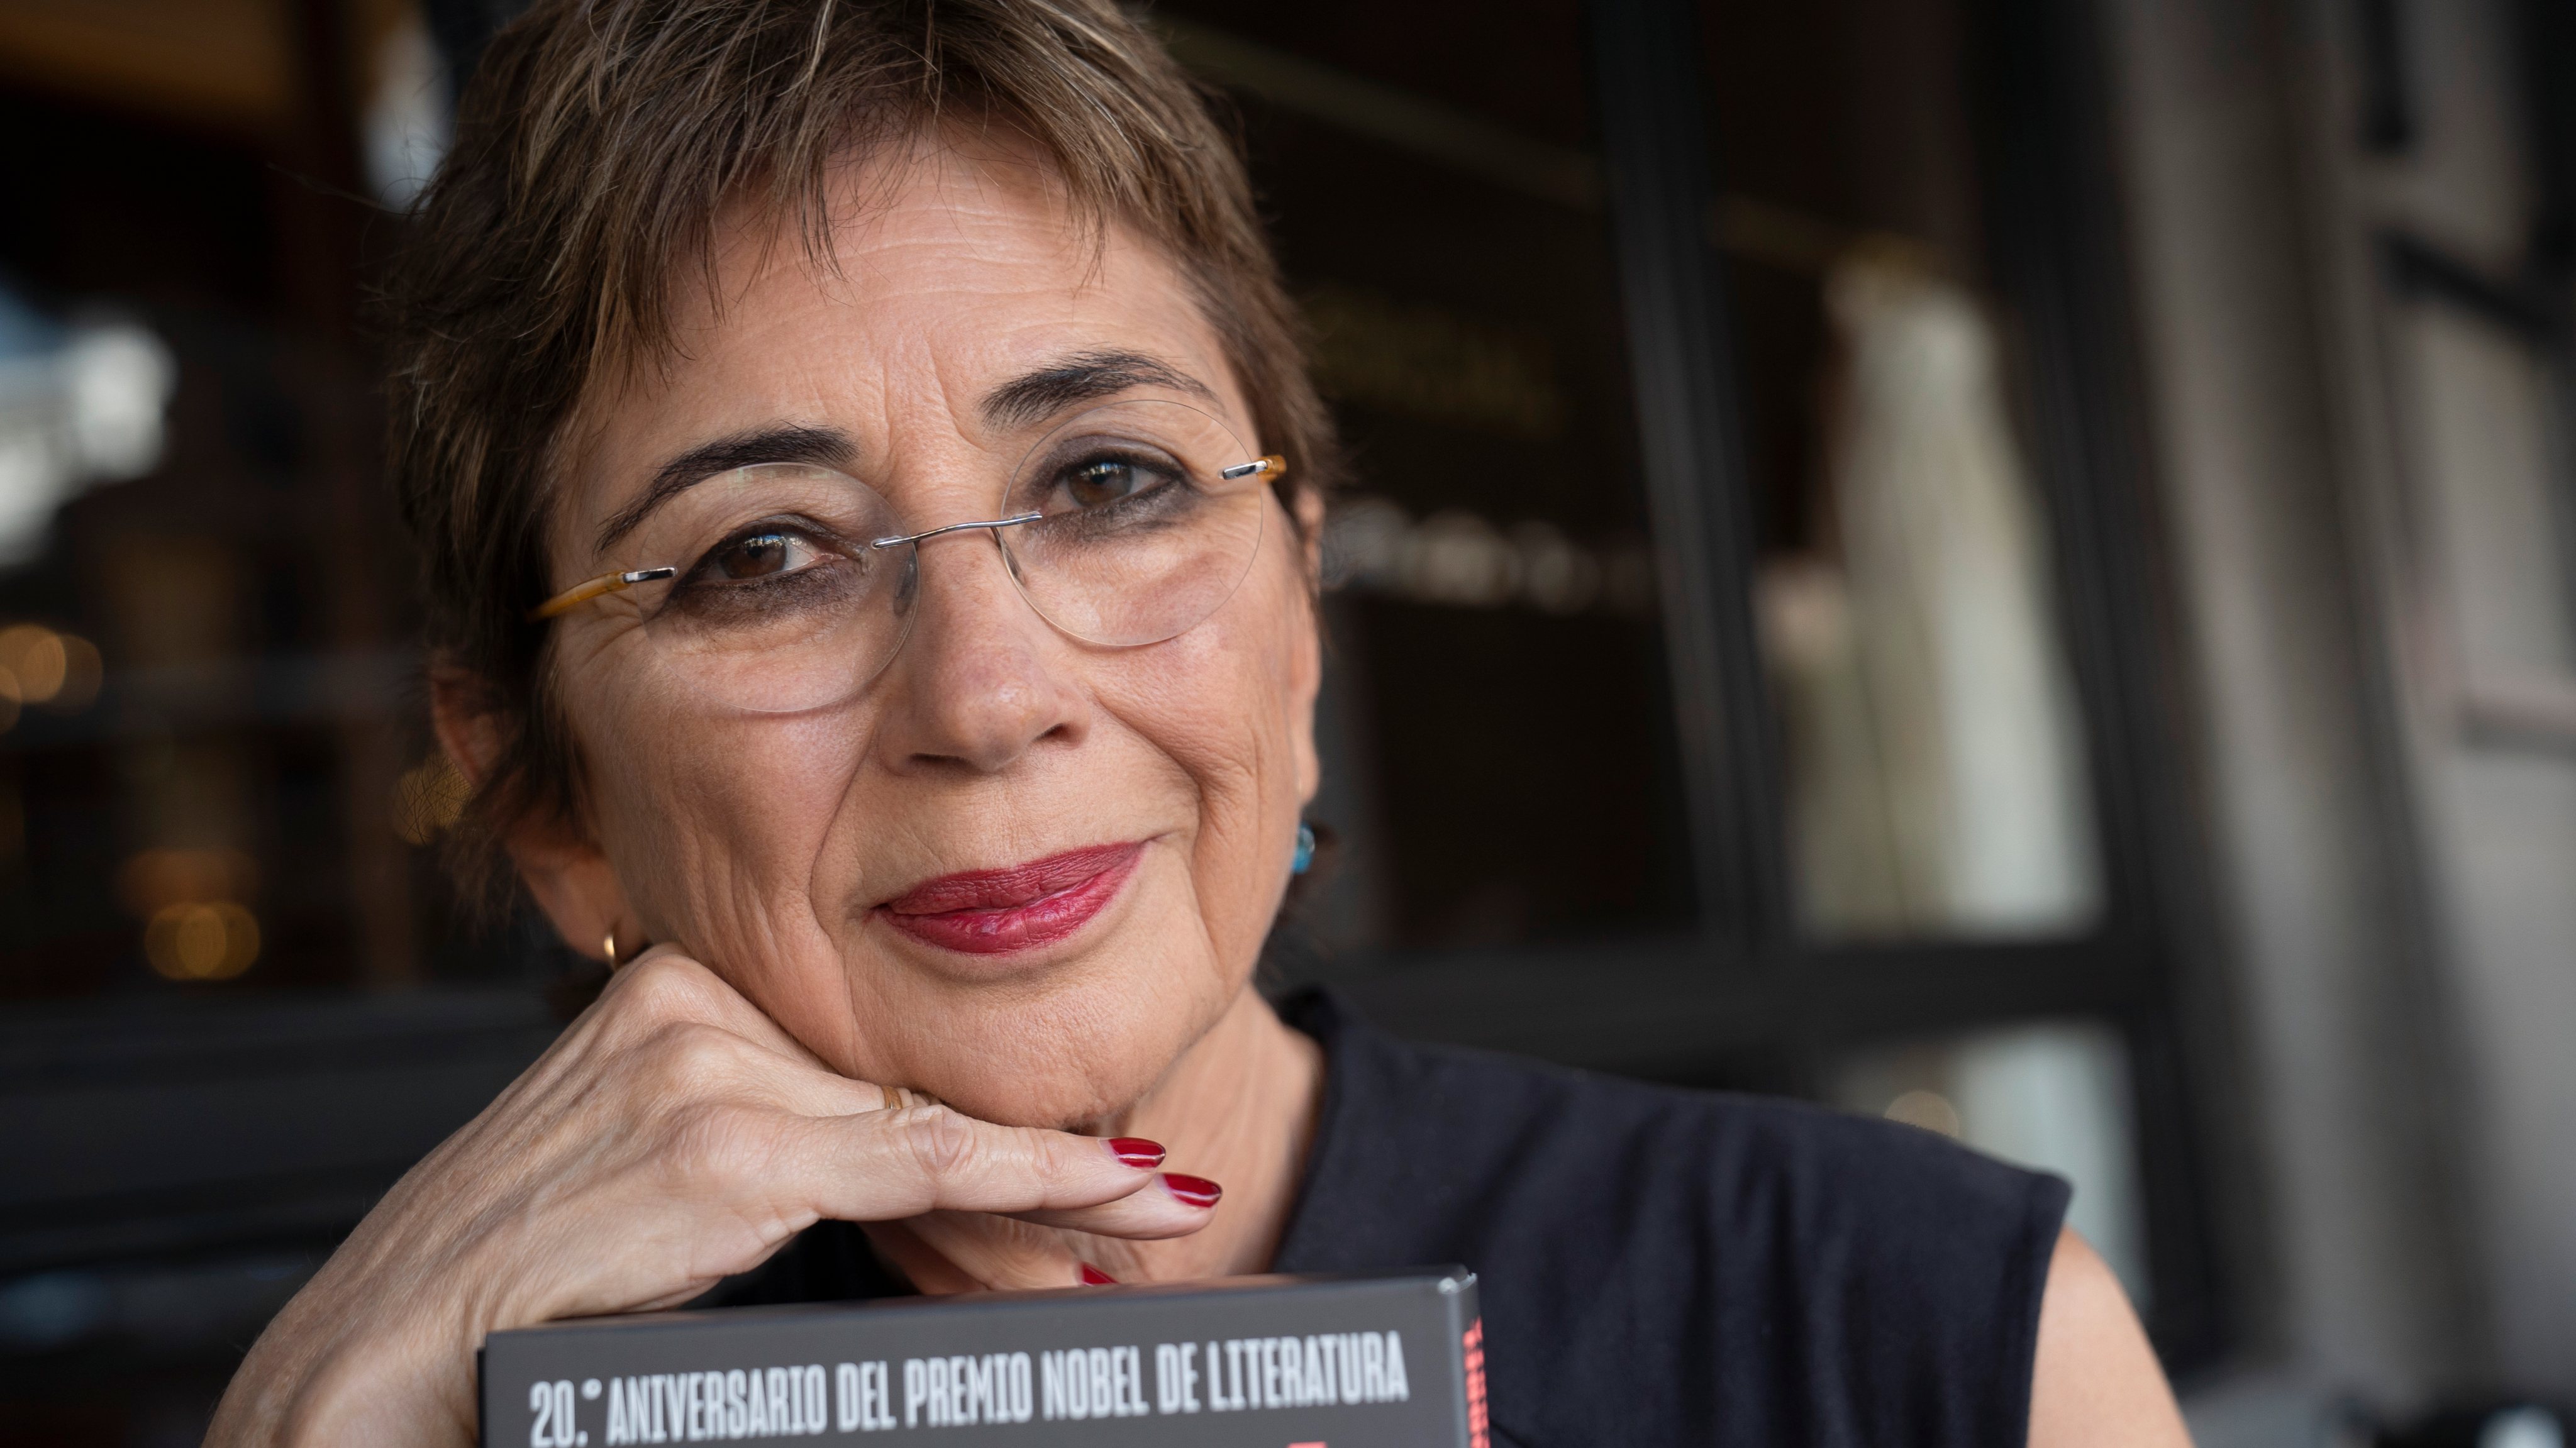 Pilar del Rio Presents A Book In Madrid